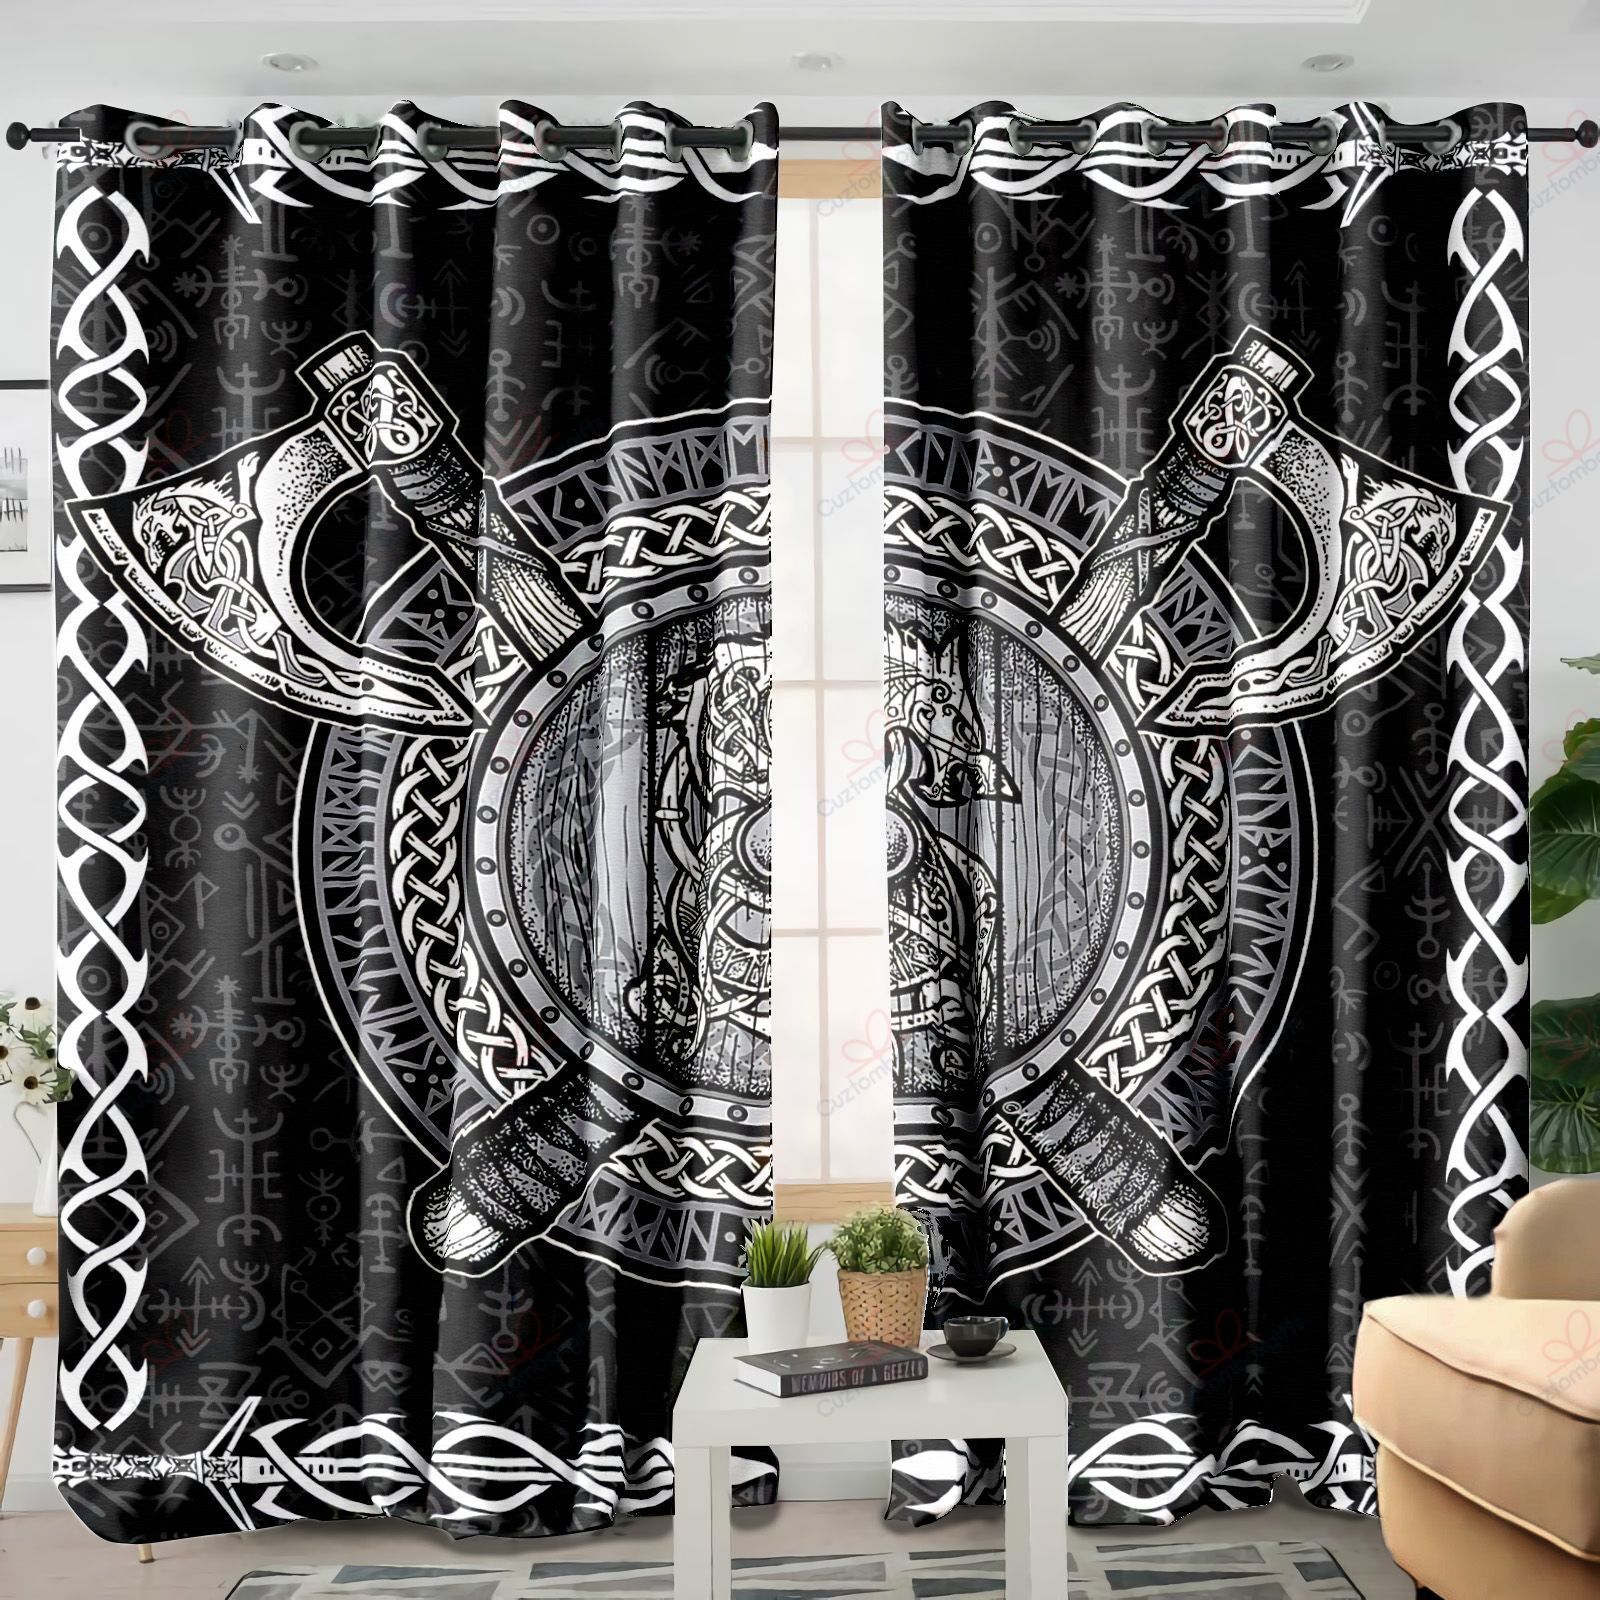 Wolf Fenrir Viking Shield Printed Window Curtain Home Decor